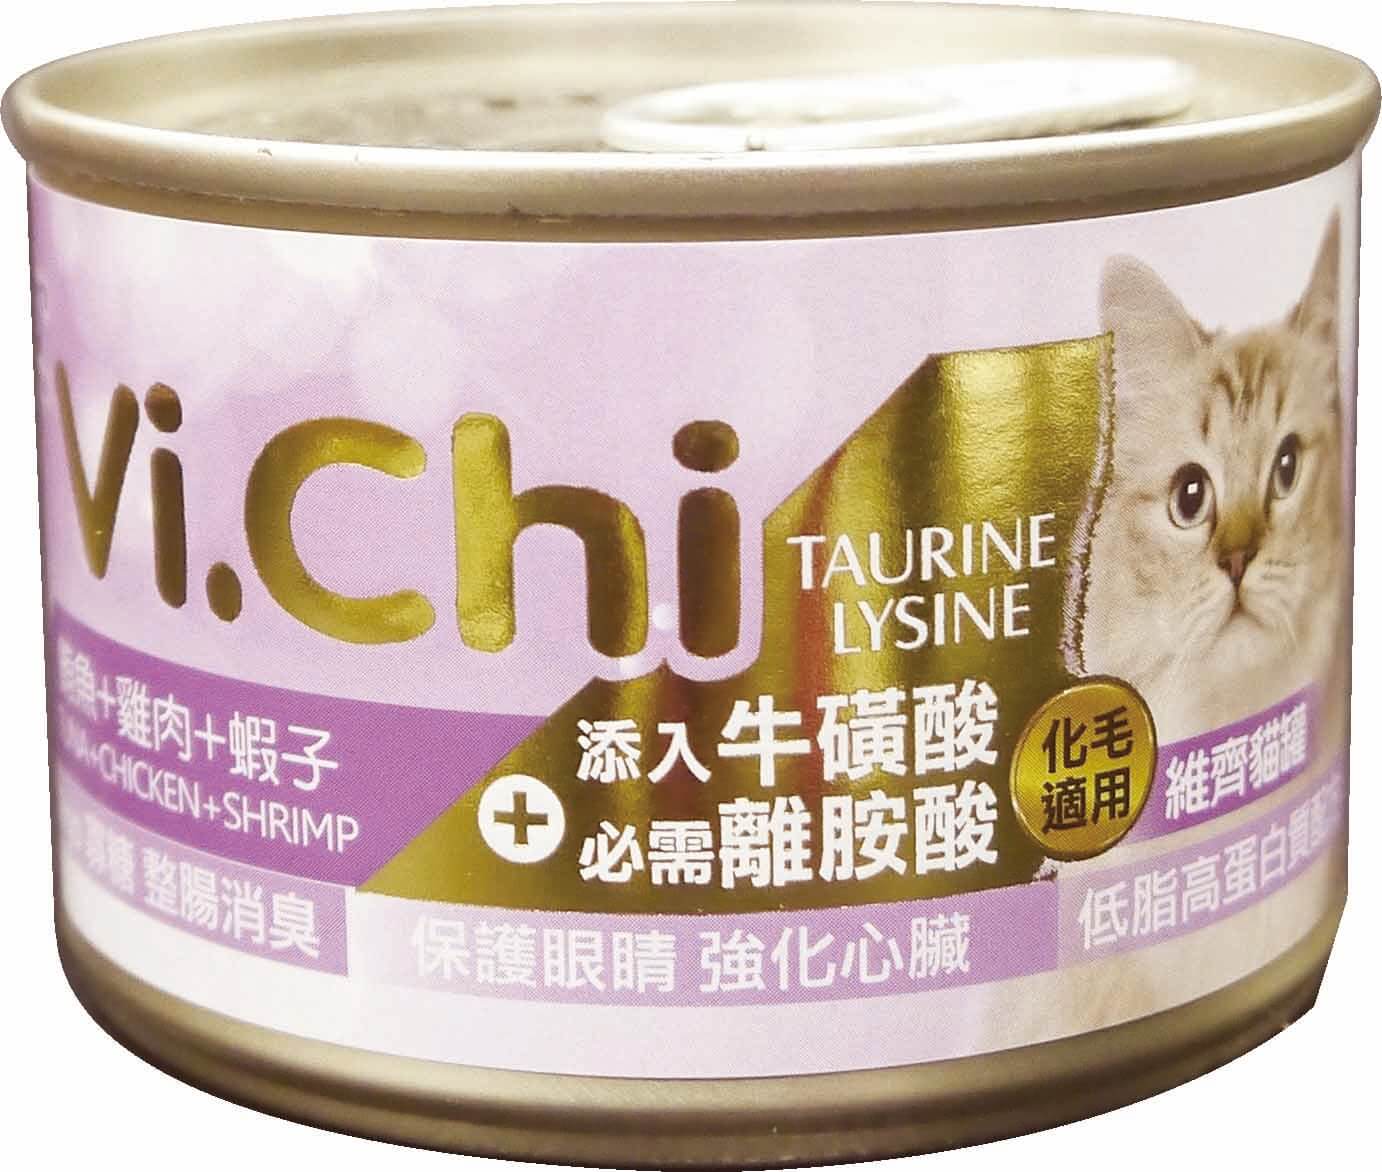 維齊貓罐160G-鮪魚+雞肉+蝦子
Vi.Chi cat can-tuna+chicken+shrimp